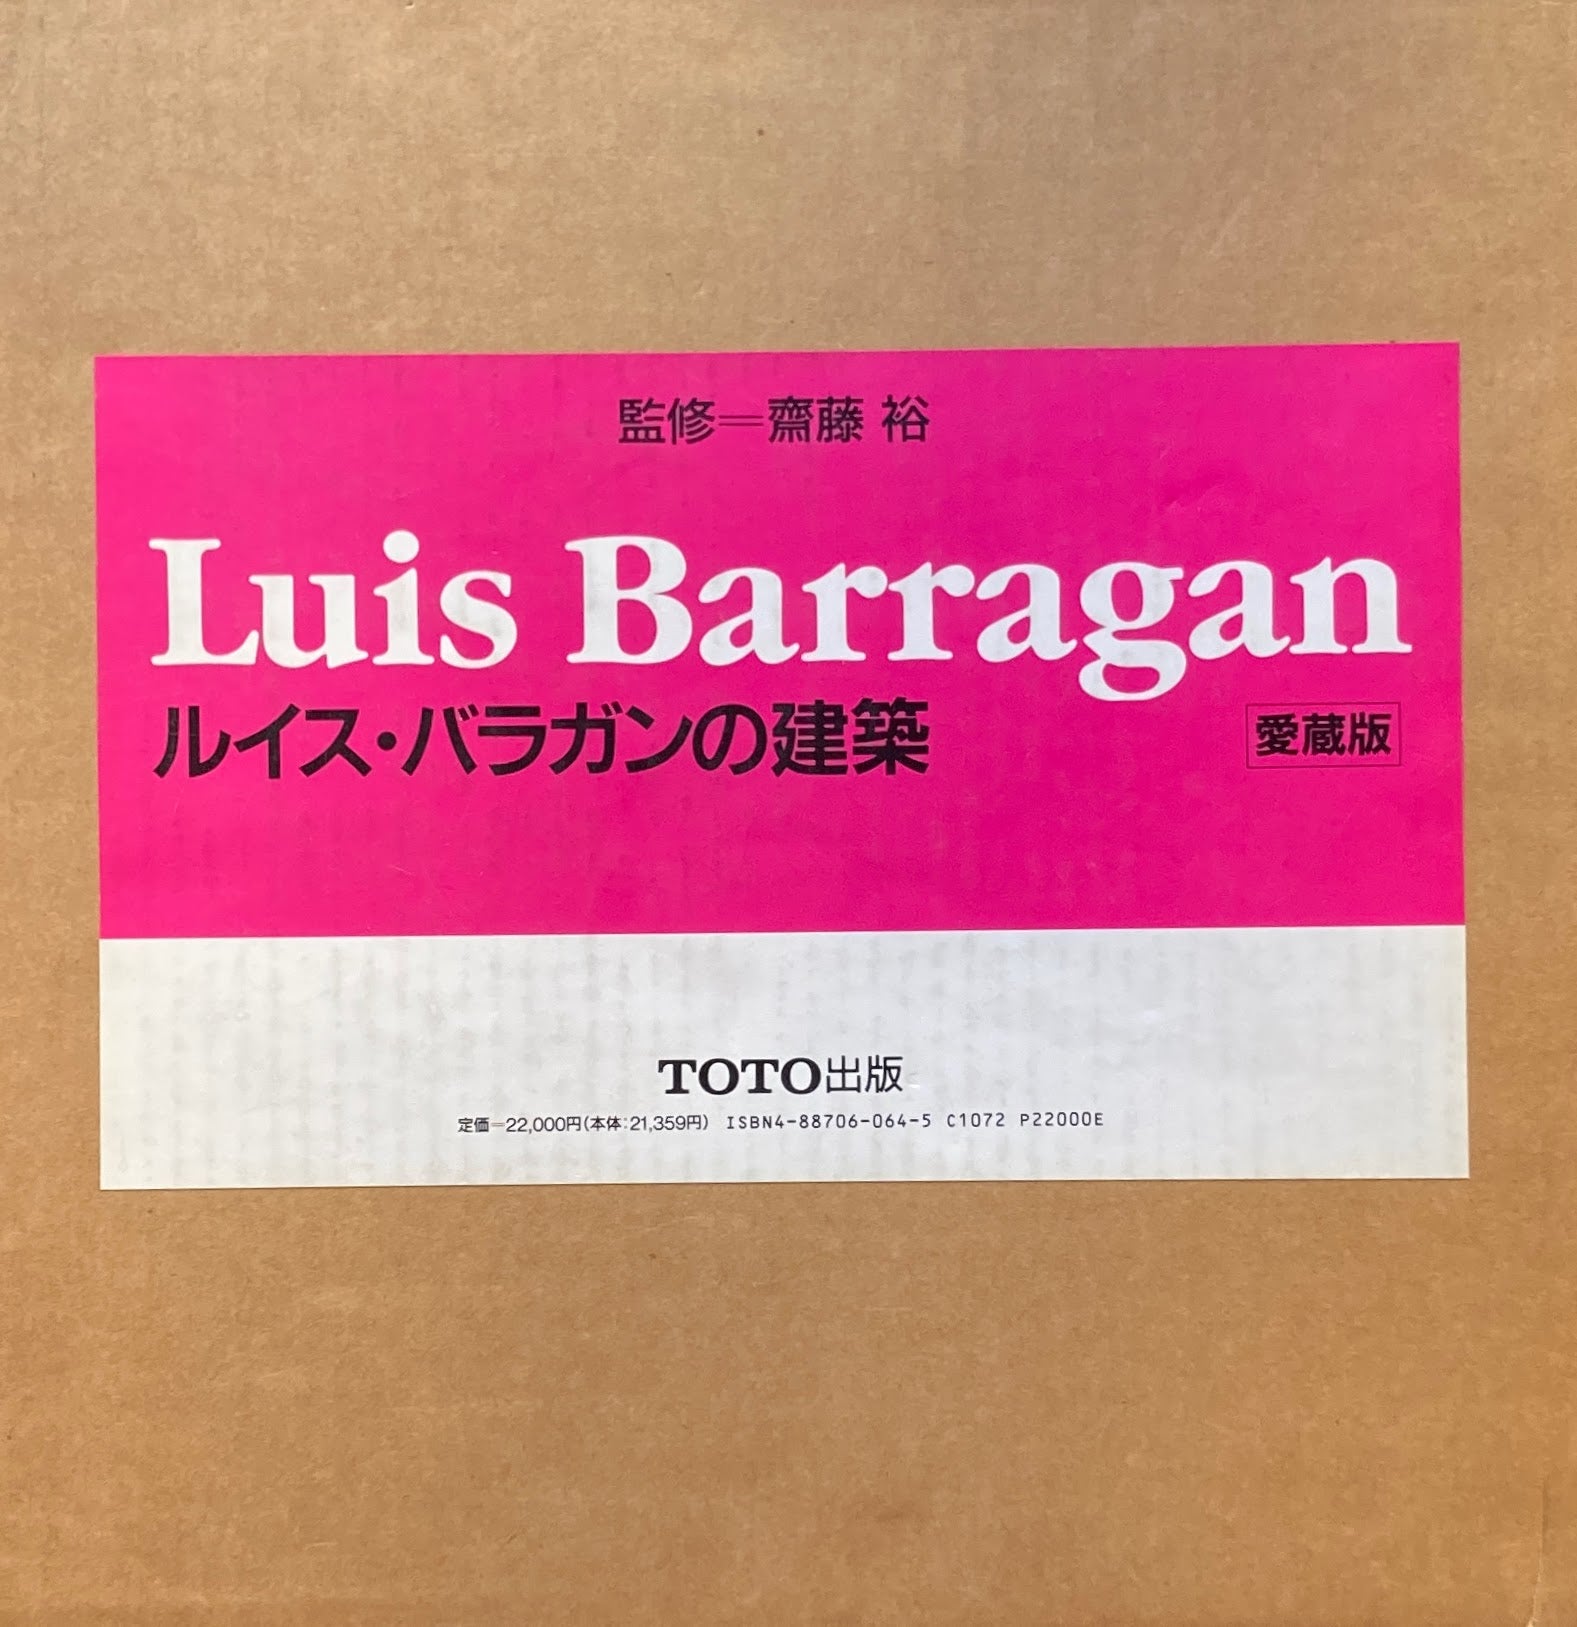 Luis Barragan ルイス・バラガンの建築 愛蔵版 – smokebooks shop